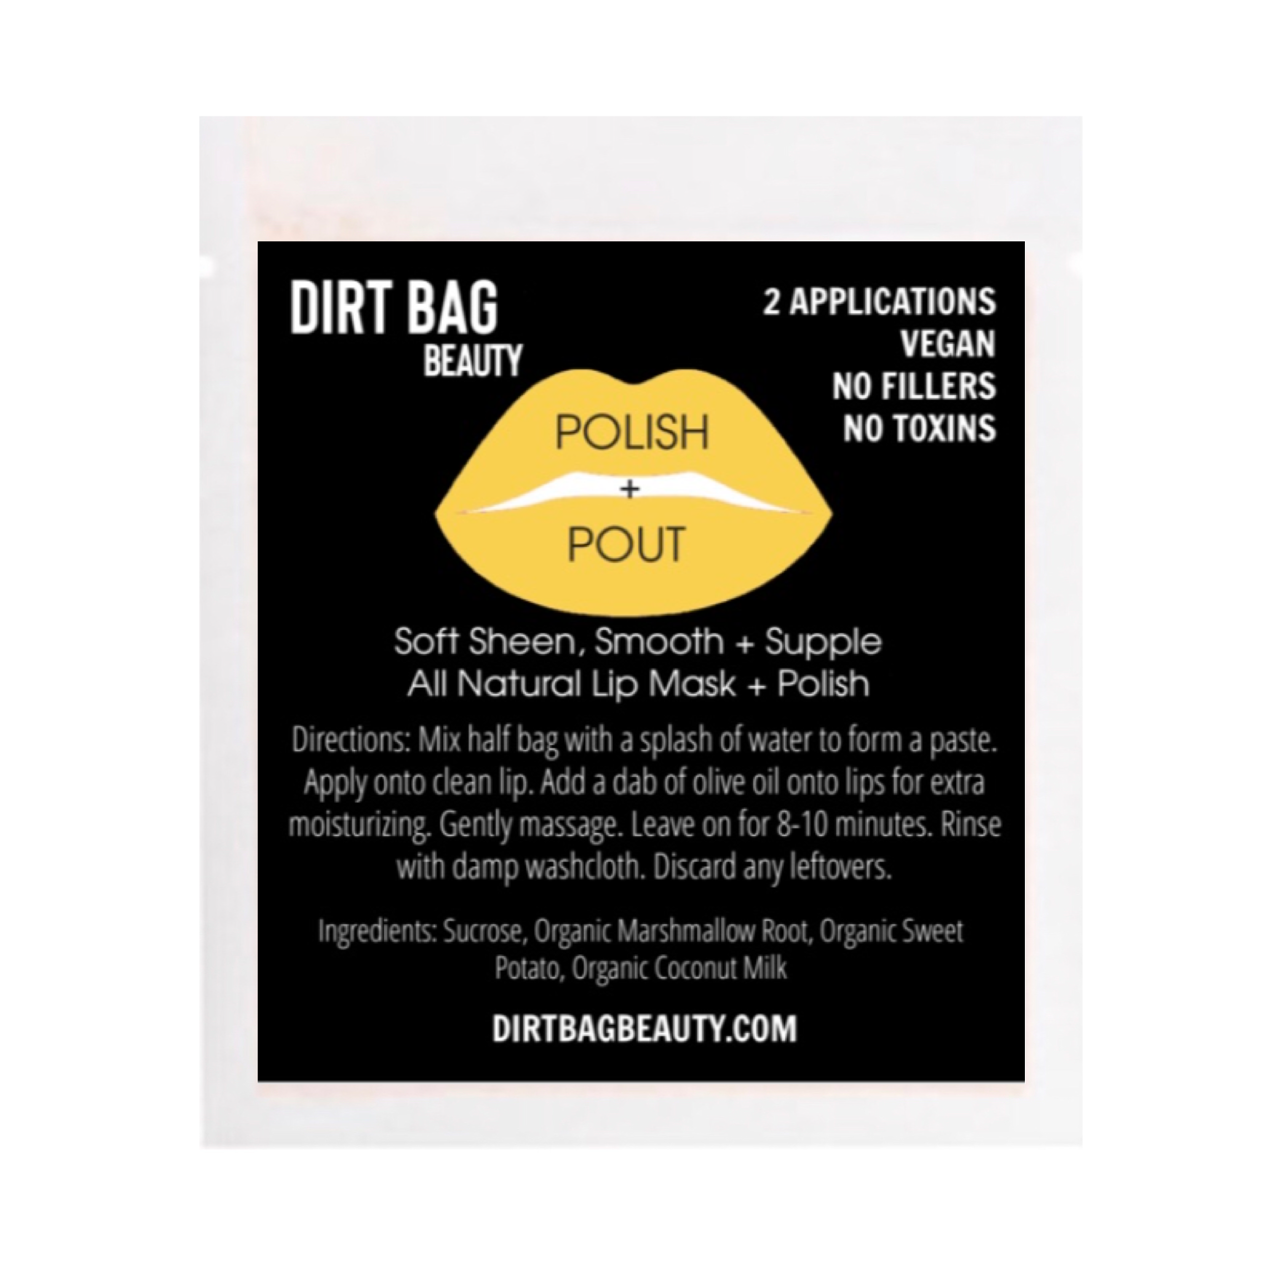 Dirt Bag® Beauty - Polish + Pout Vegan Lip Mask and Polish